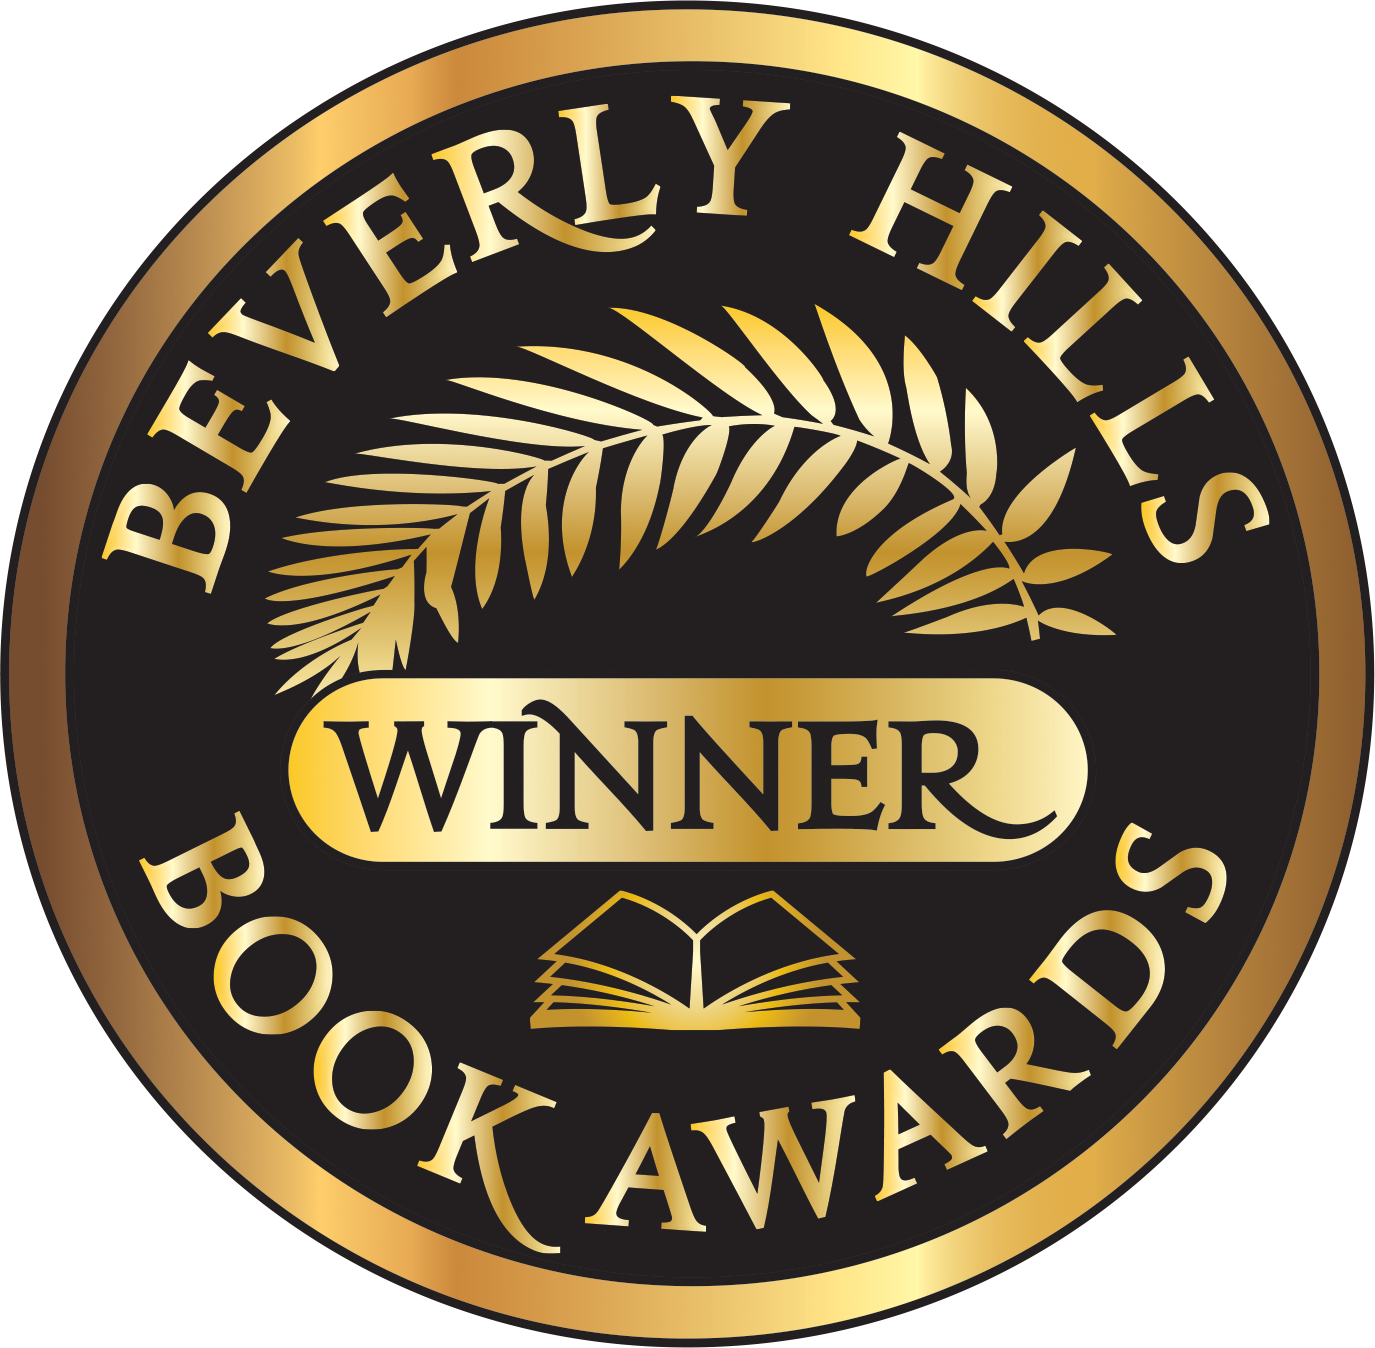 The Beverly Hill Book Award Winner Seal